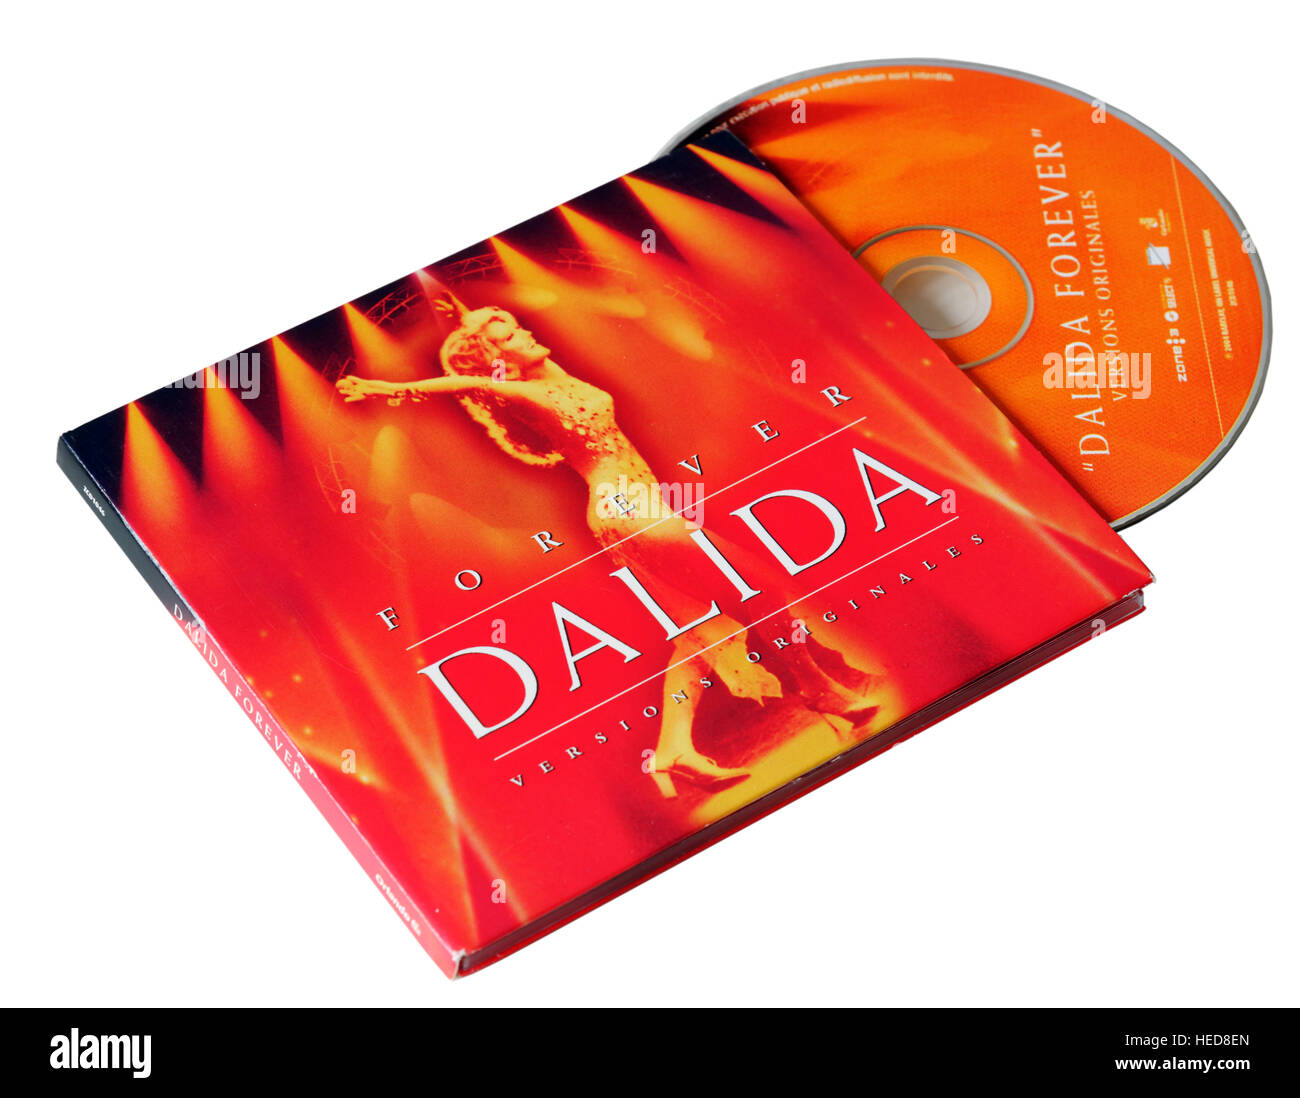 Forever Dalida CD Foto de stock